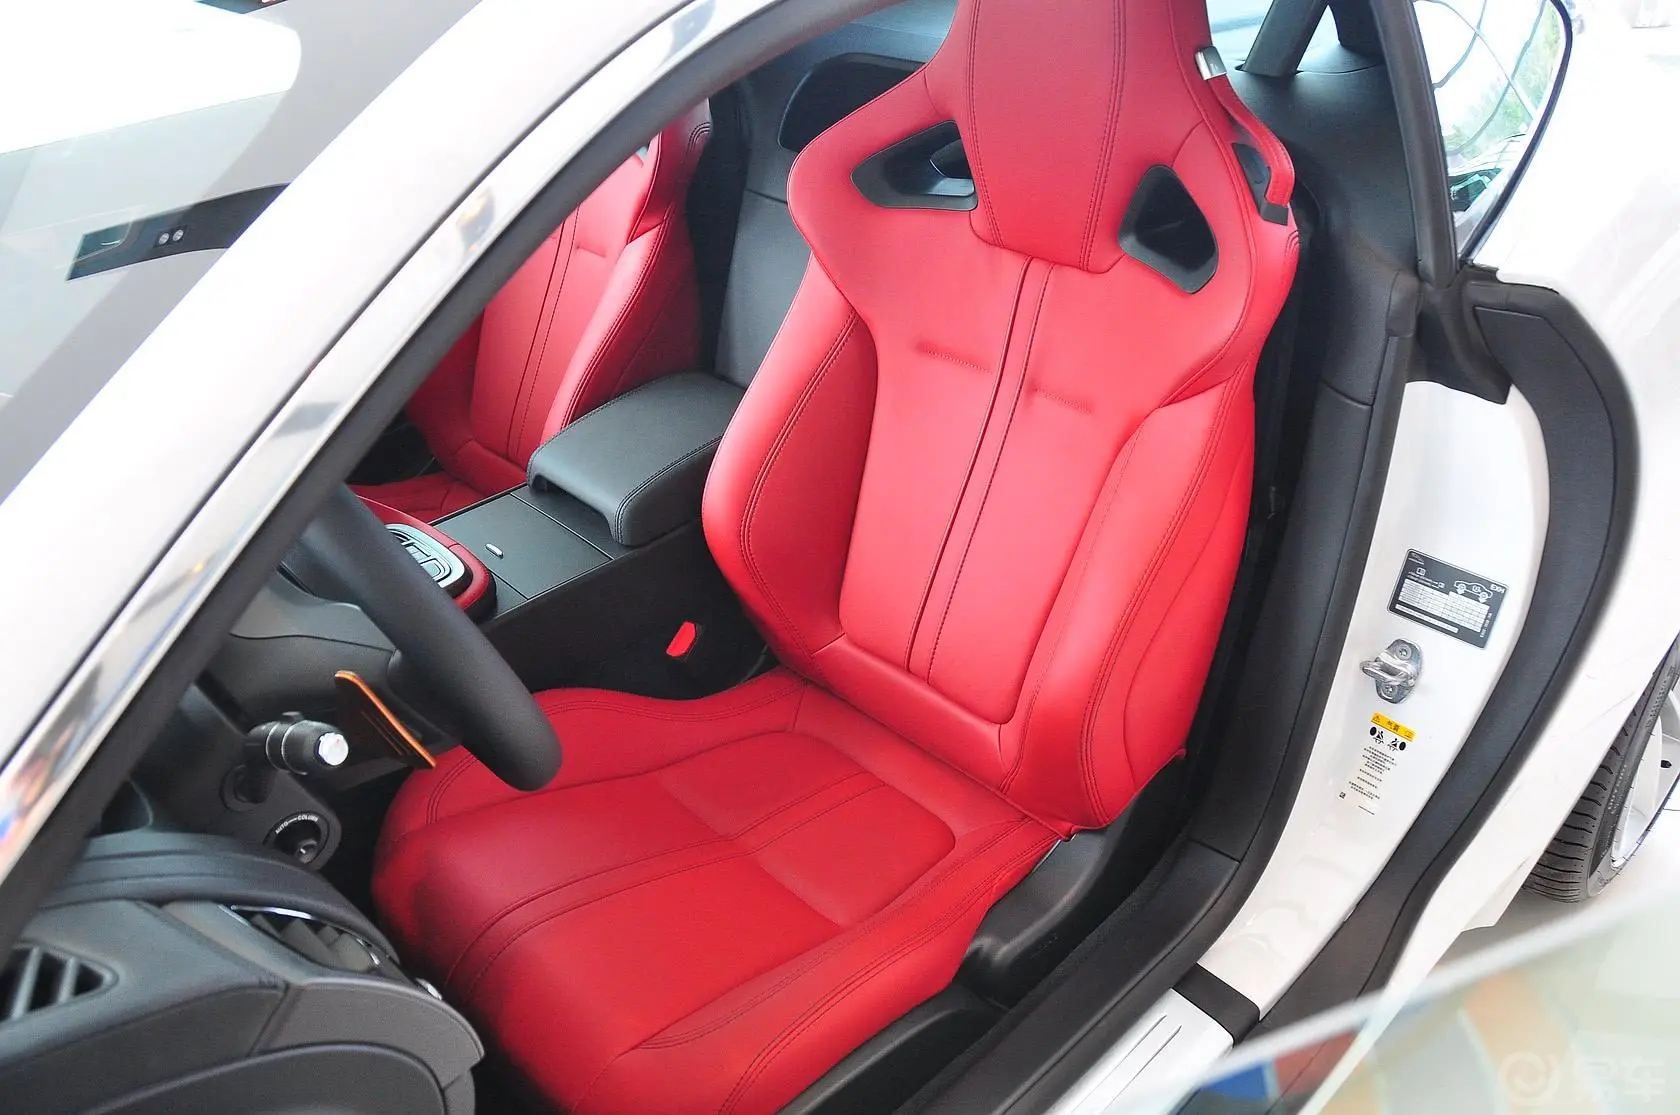 捷豹F-TYPE3.0T V6 S Coupe驾驶员座椅